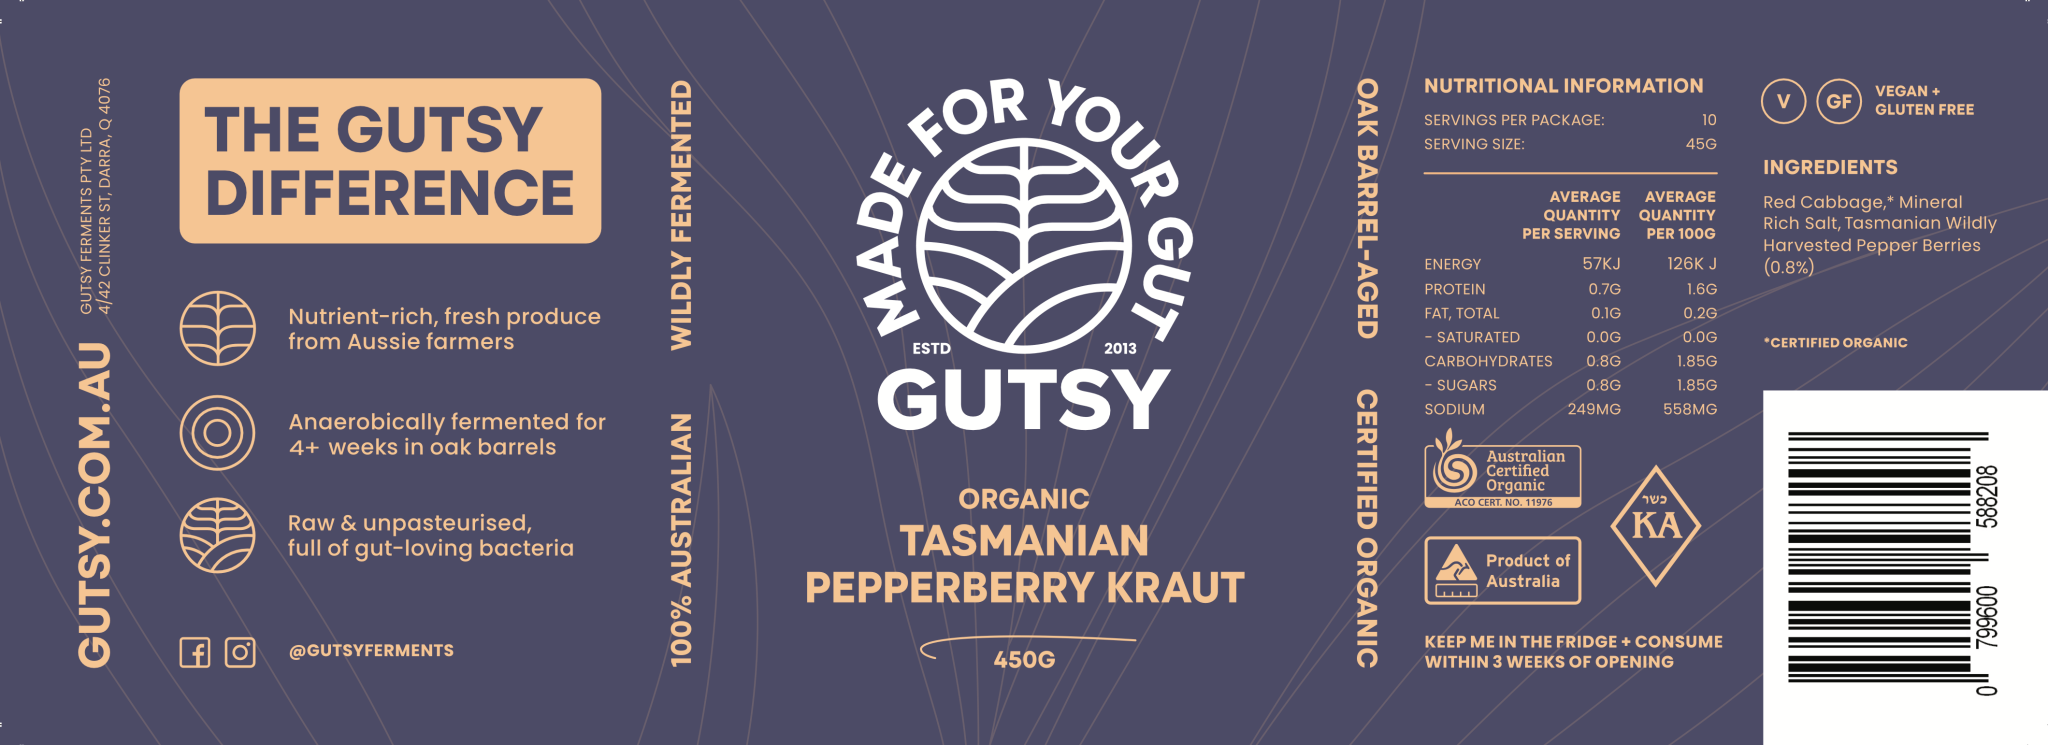 Organic Probiotic Tasmanian Pepperberry Kraut